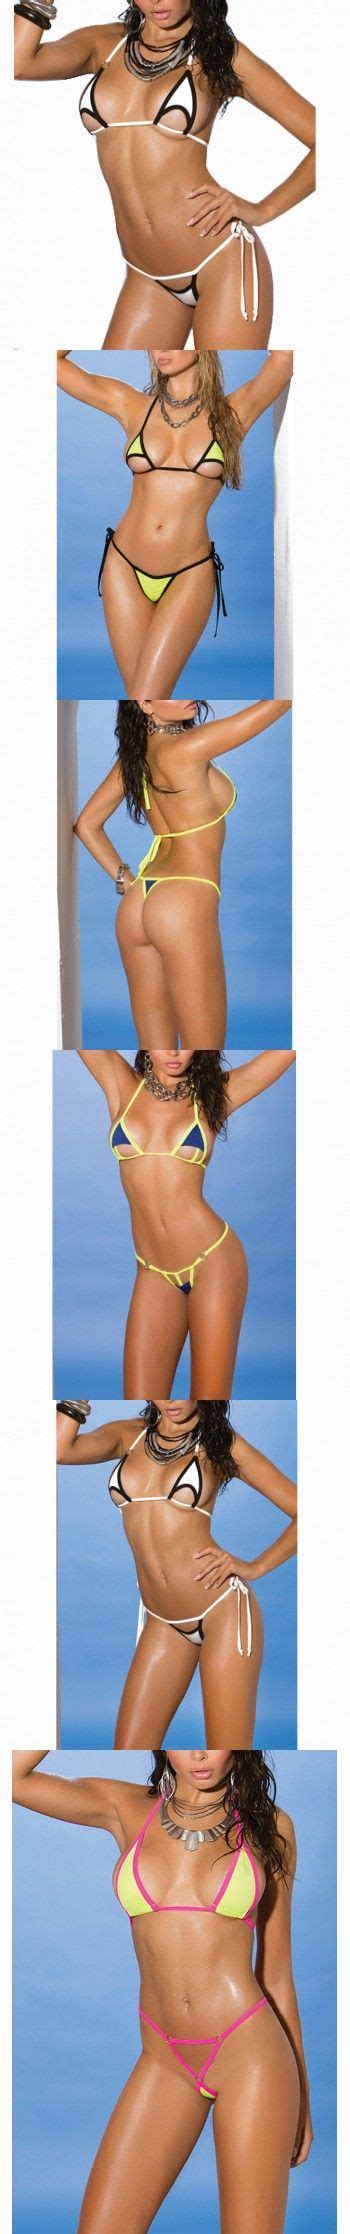 36 best micro bikini images on pinterest dental floss string bikinis and bikini